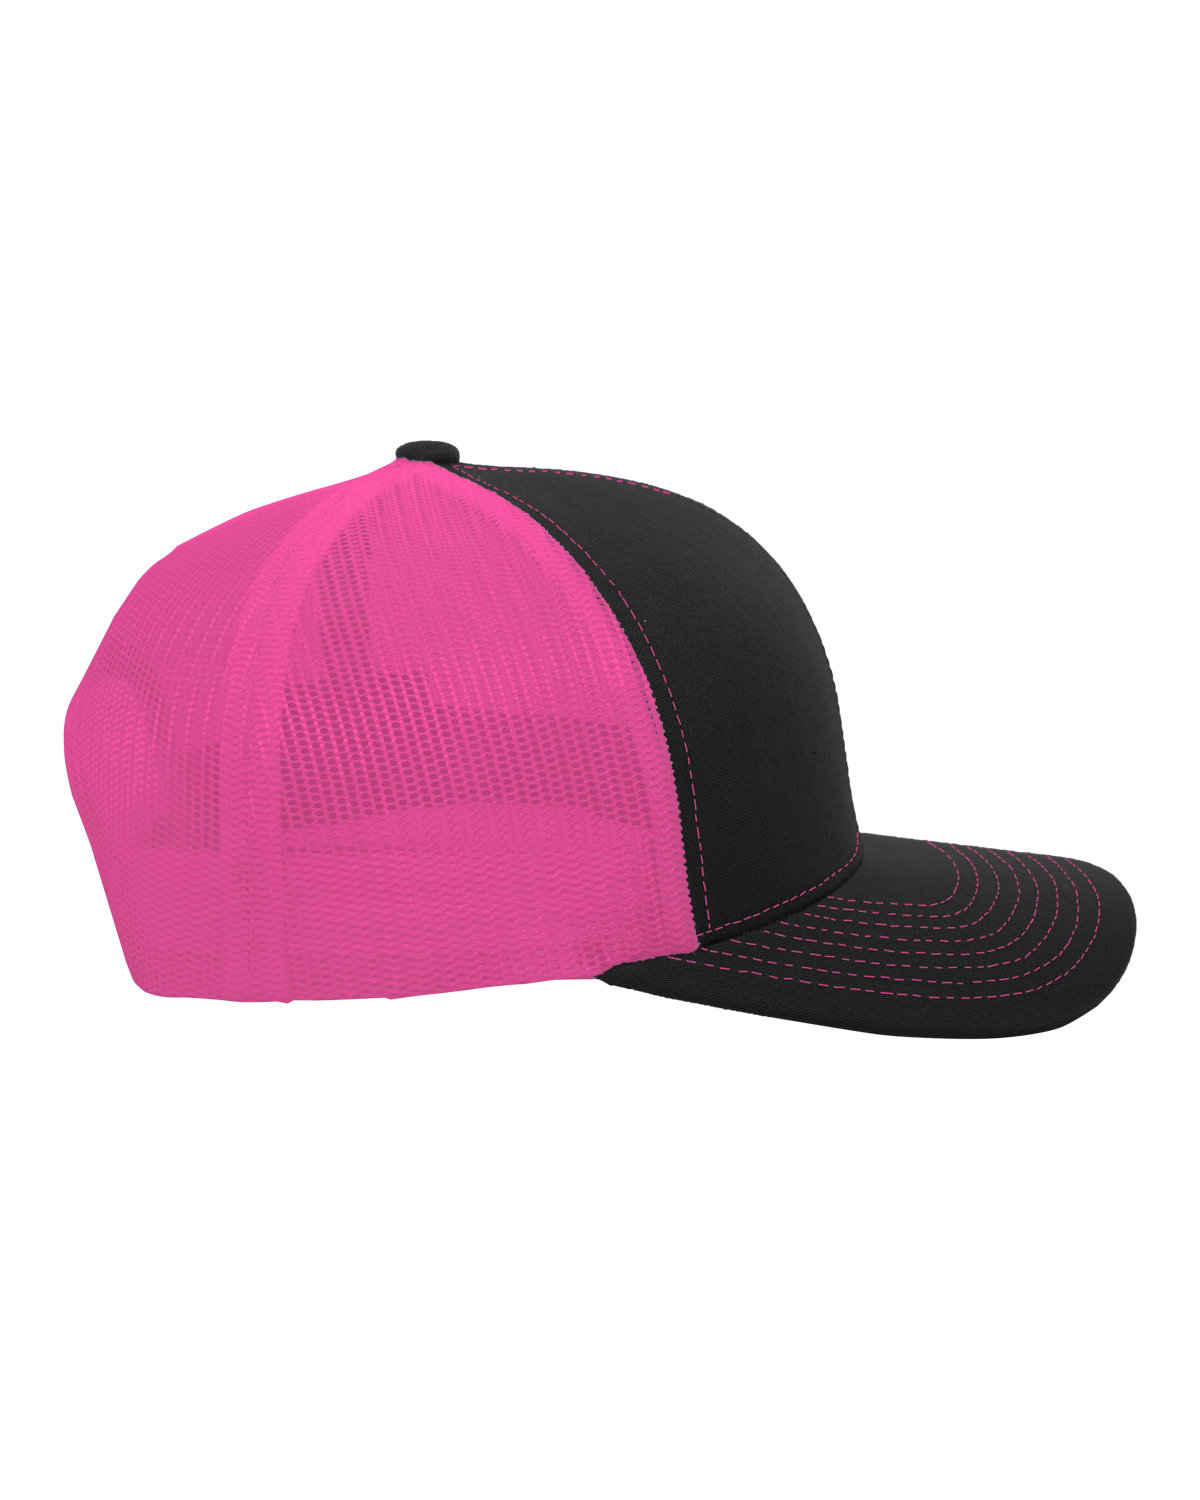 Pacific Headwear Trucker Snapback Hat | alphabroder